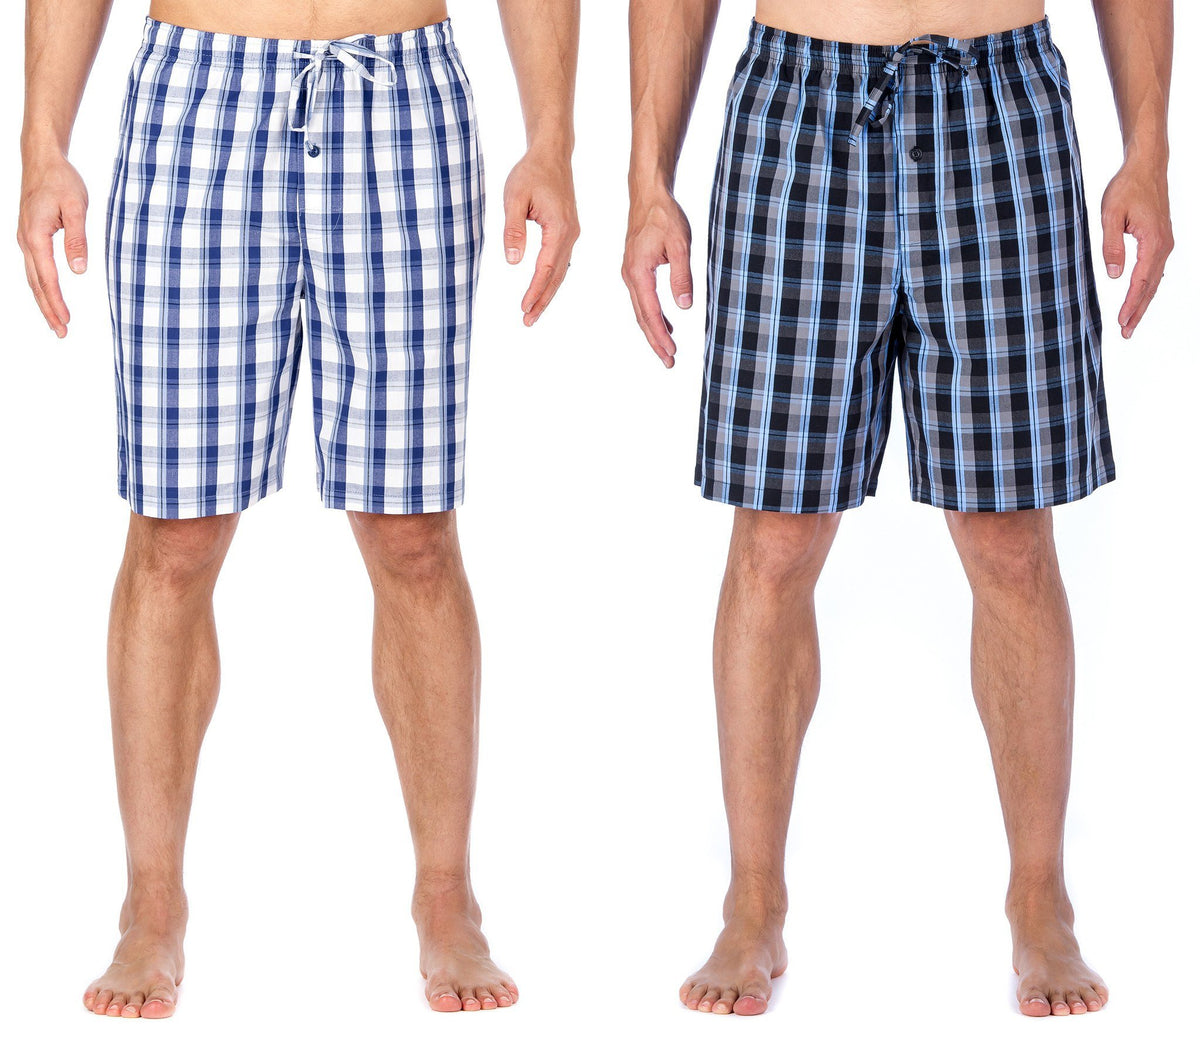 Men's Premium Cotton Sleep Shorts (2-Pack) - Blue/Grey - Blue/White Plaid